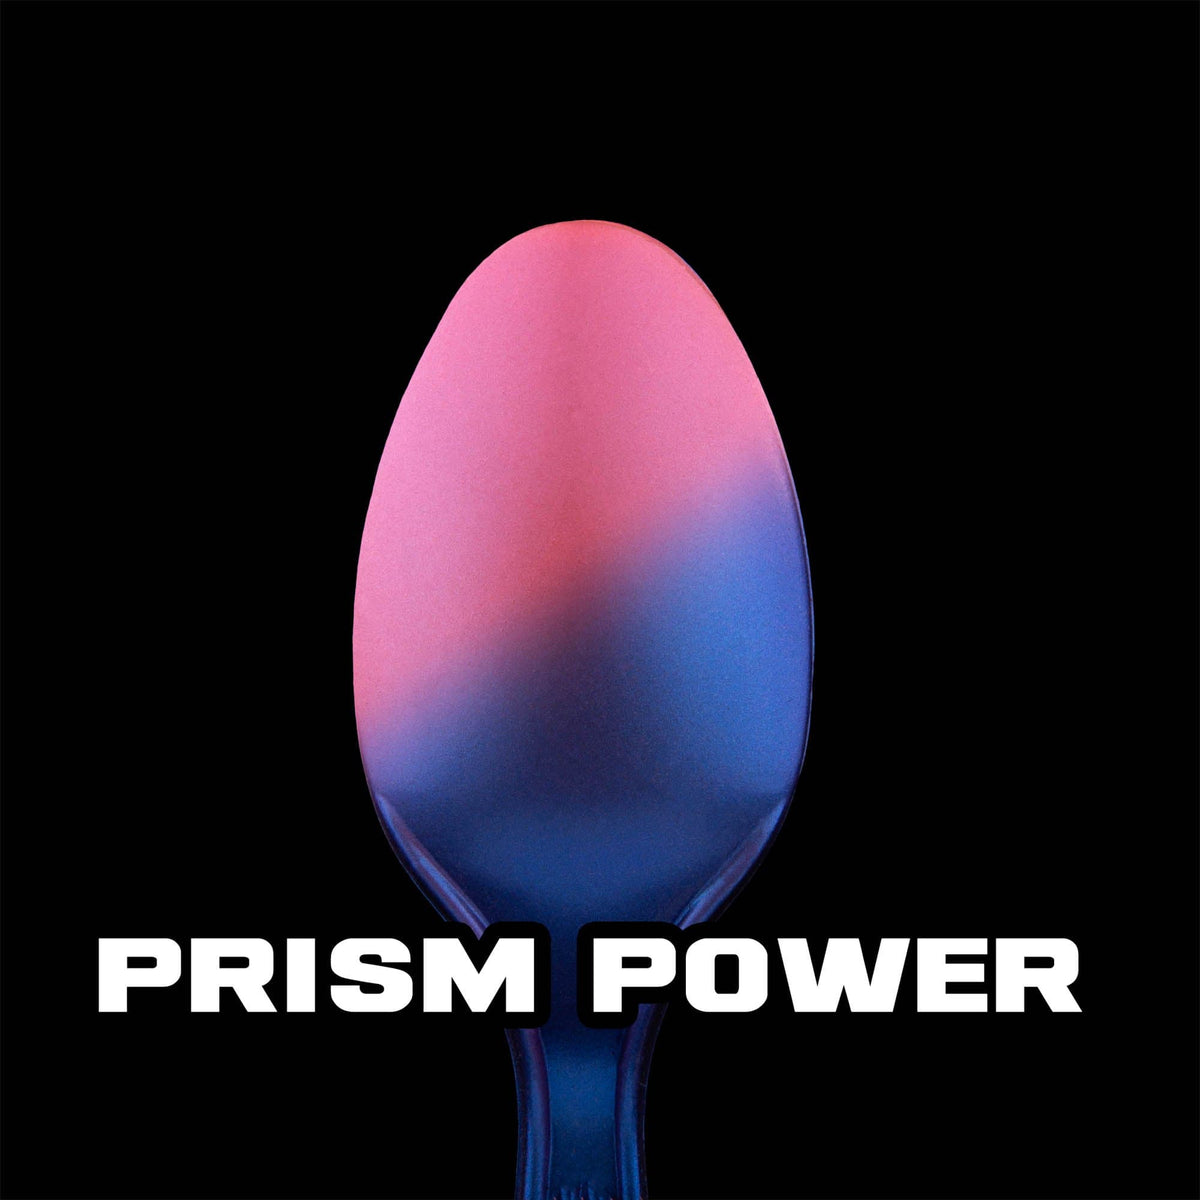 Prism Power Turboshift Acrylic Paint Turboshift Turbo Dork Exit 23 Games Prism Power Turboshift Acrylic Paint